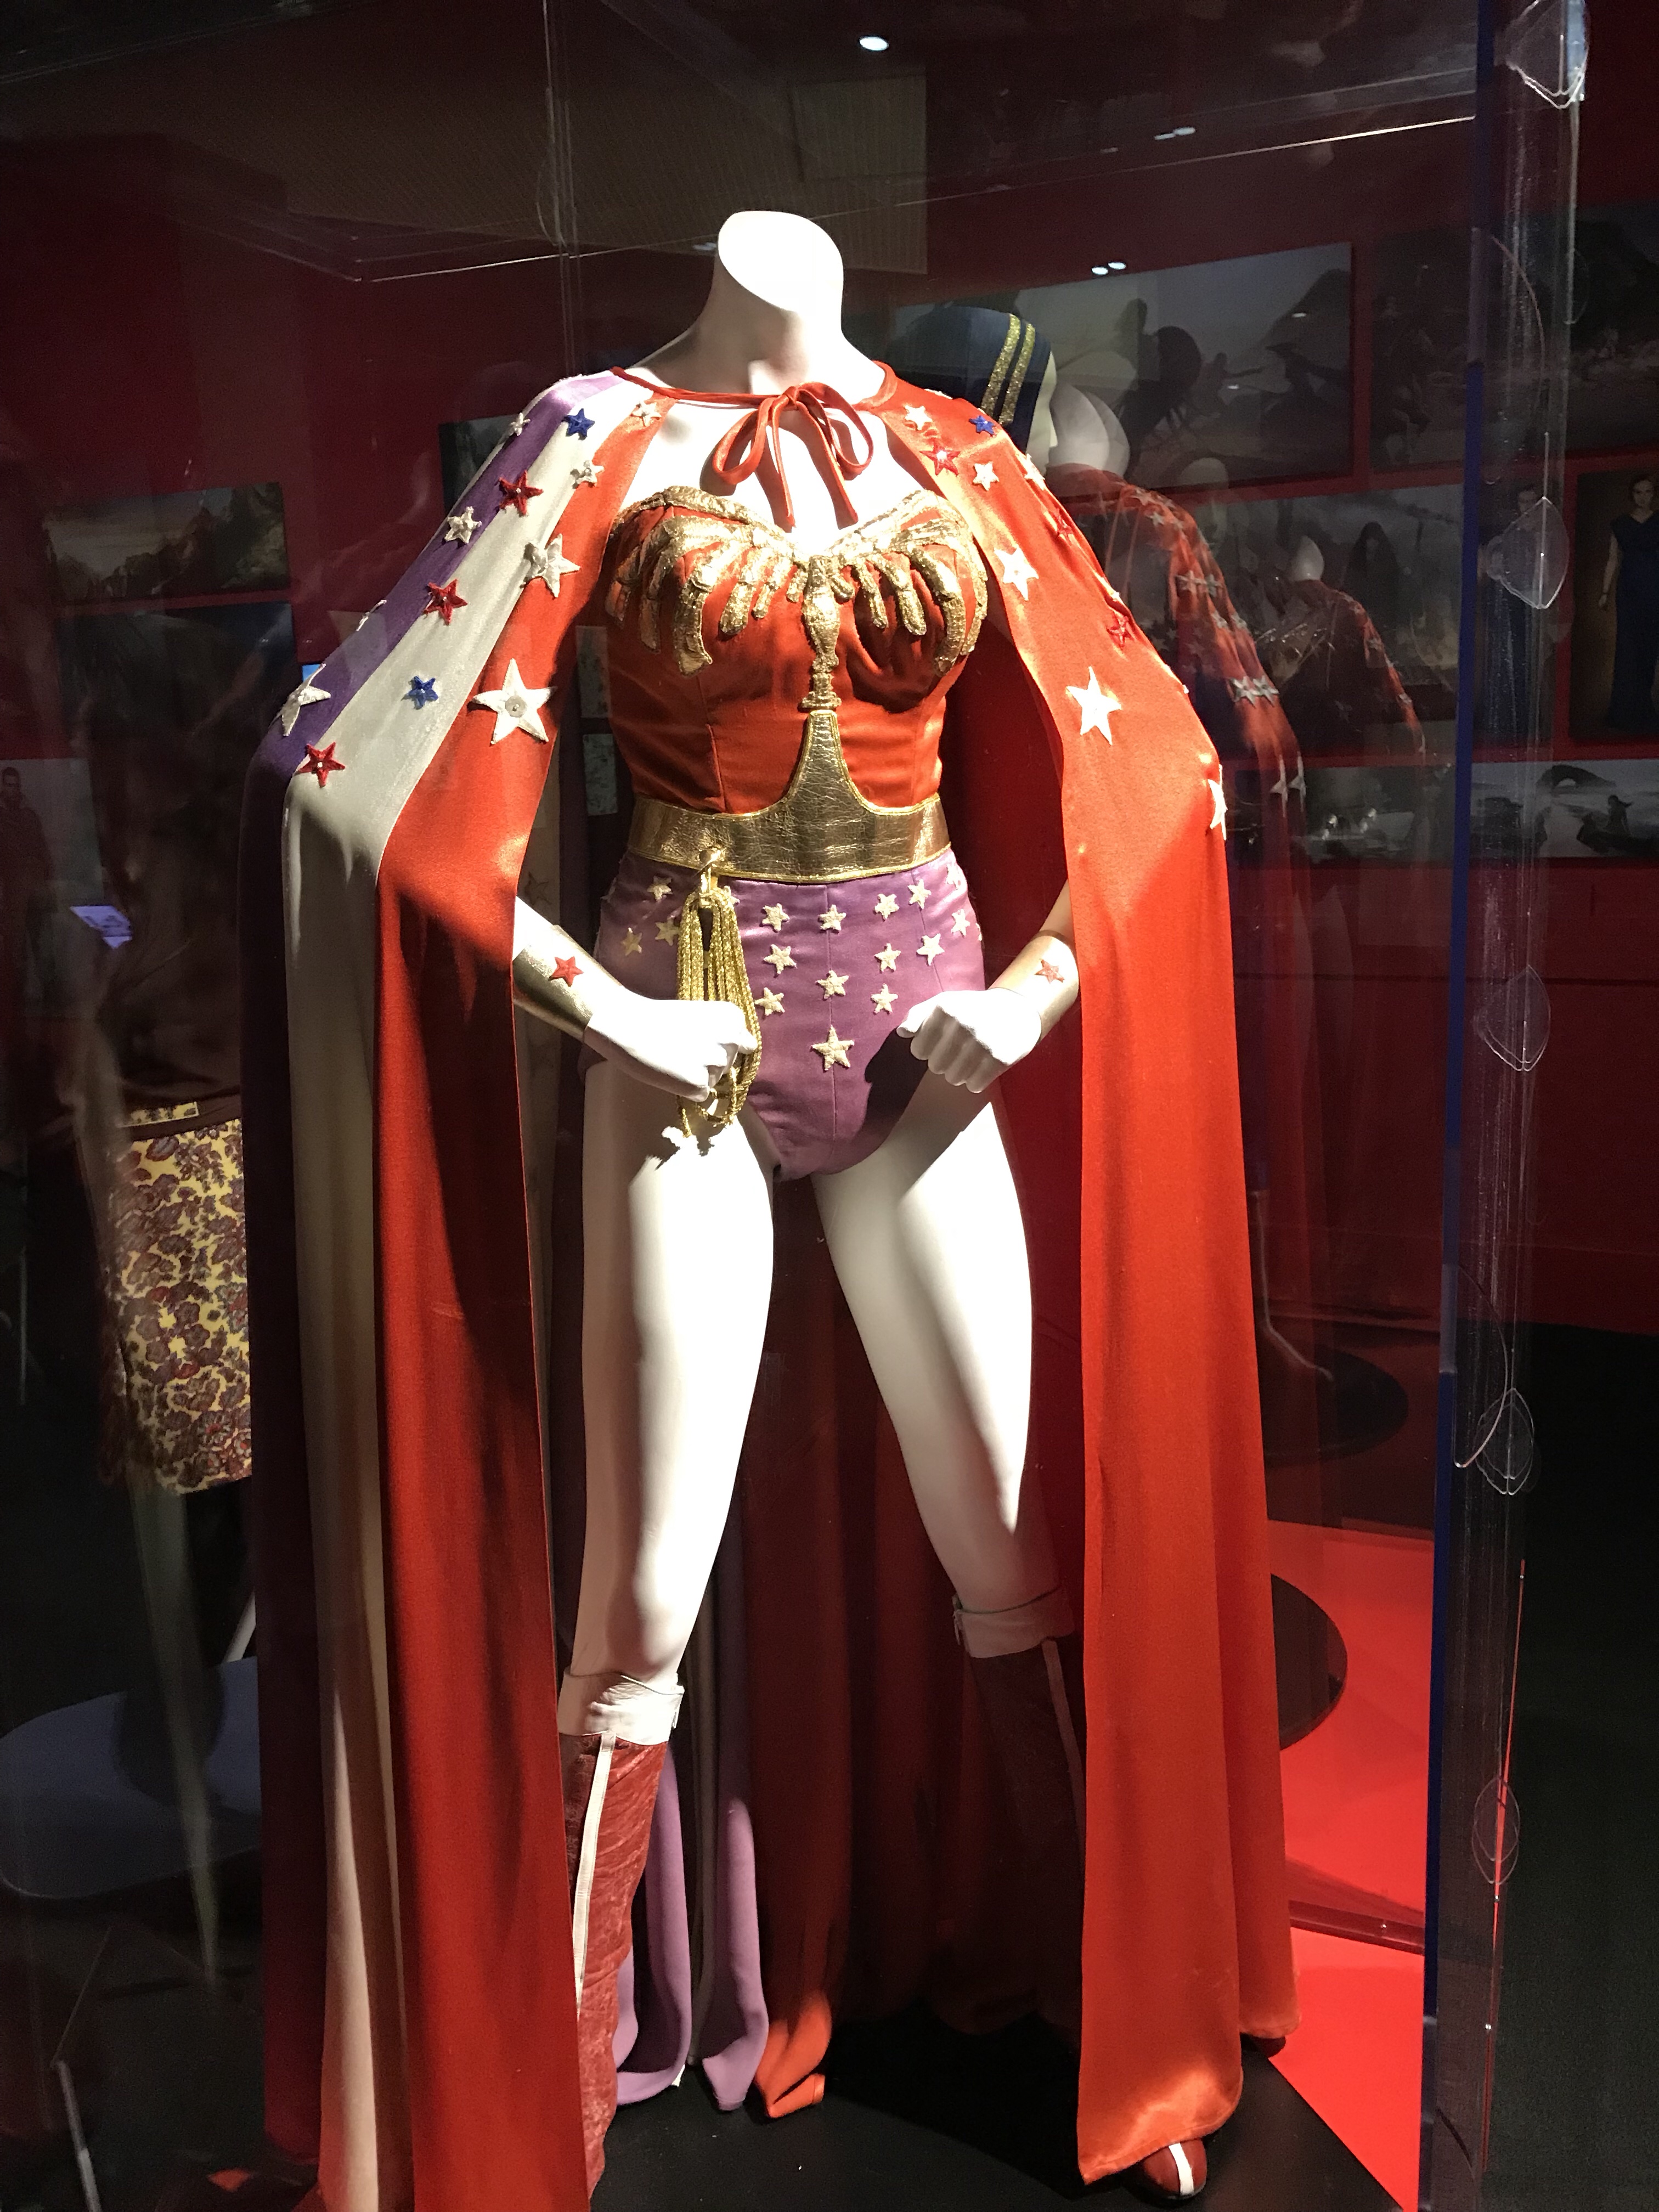 Lynda Carter's Wonder Woman Costume in the TV show.